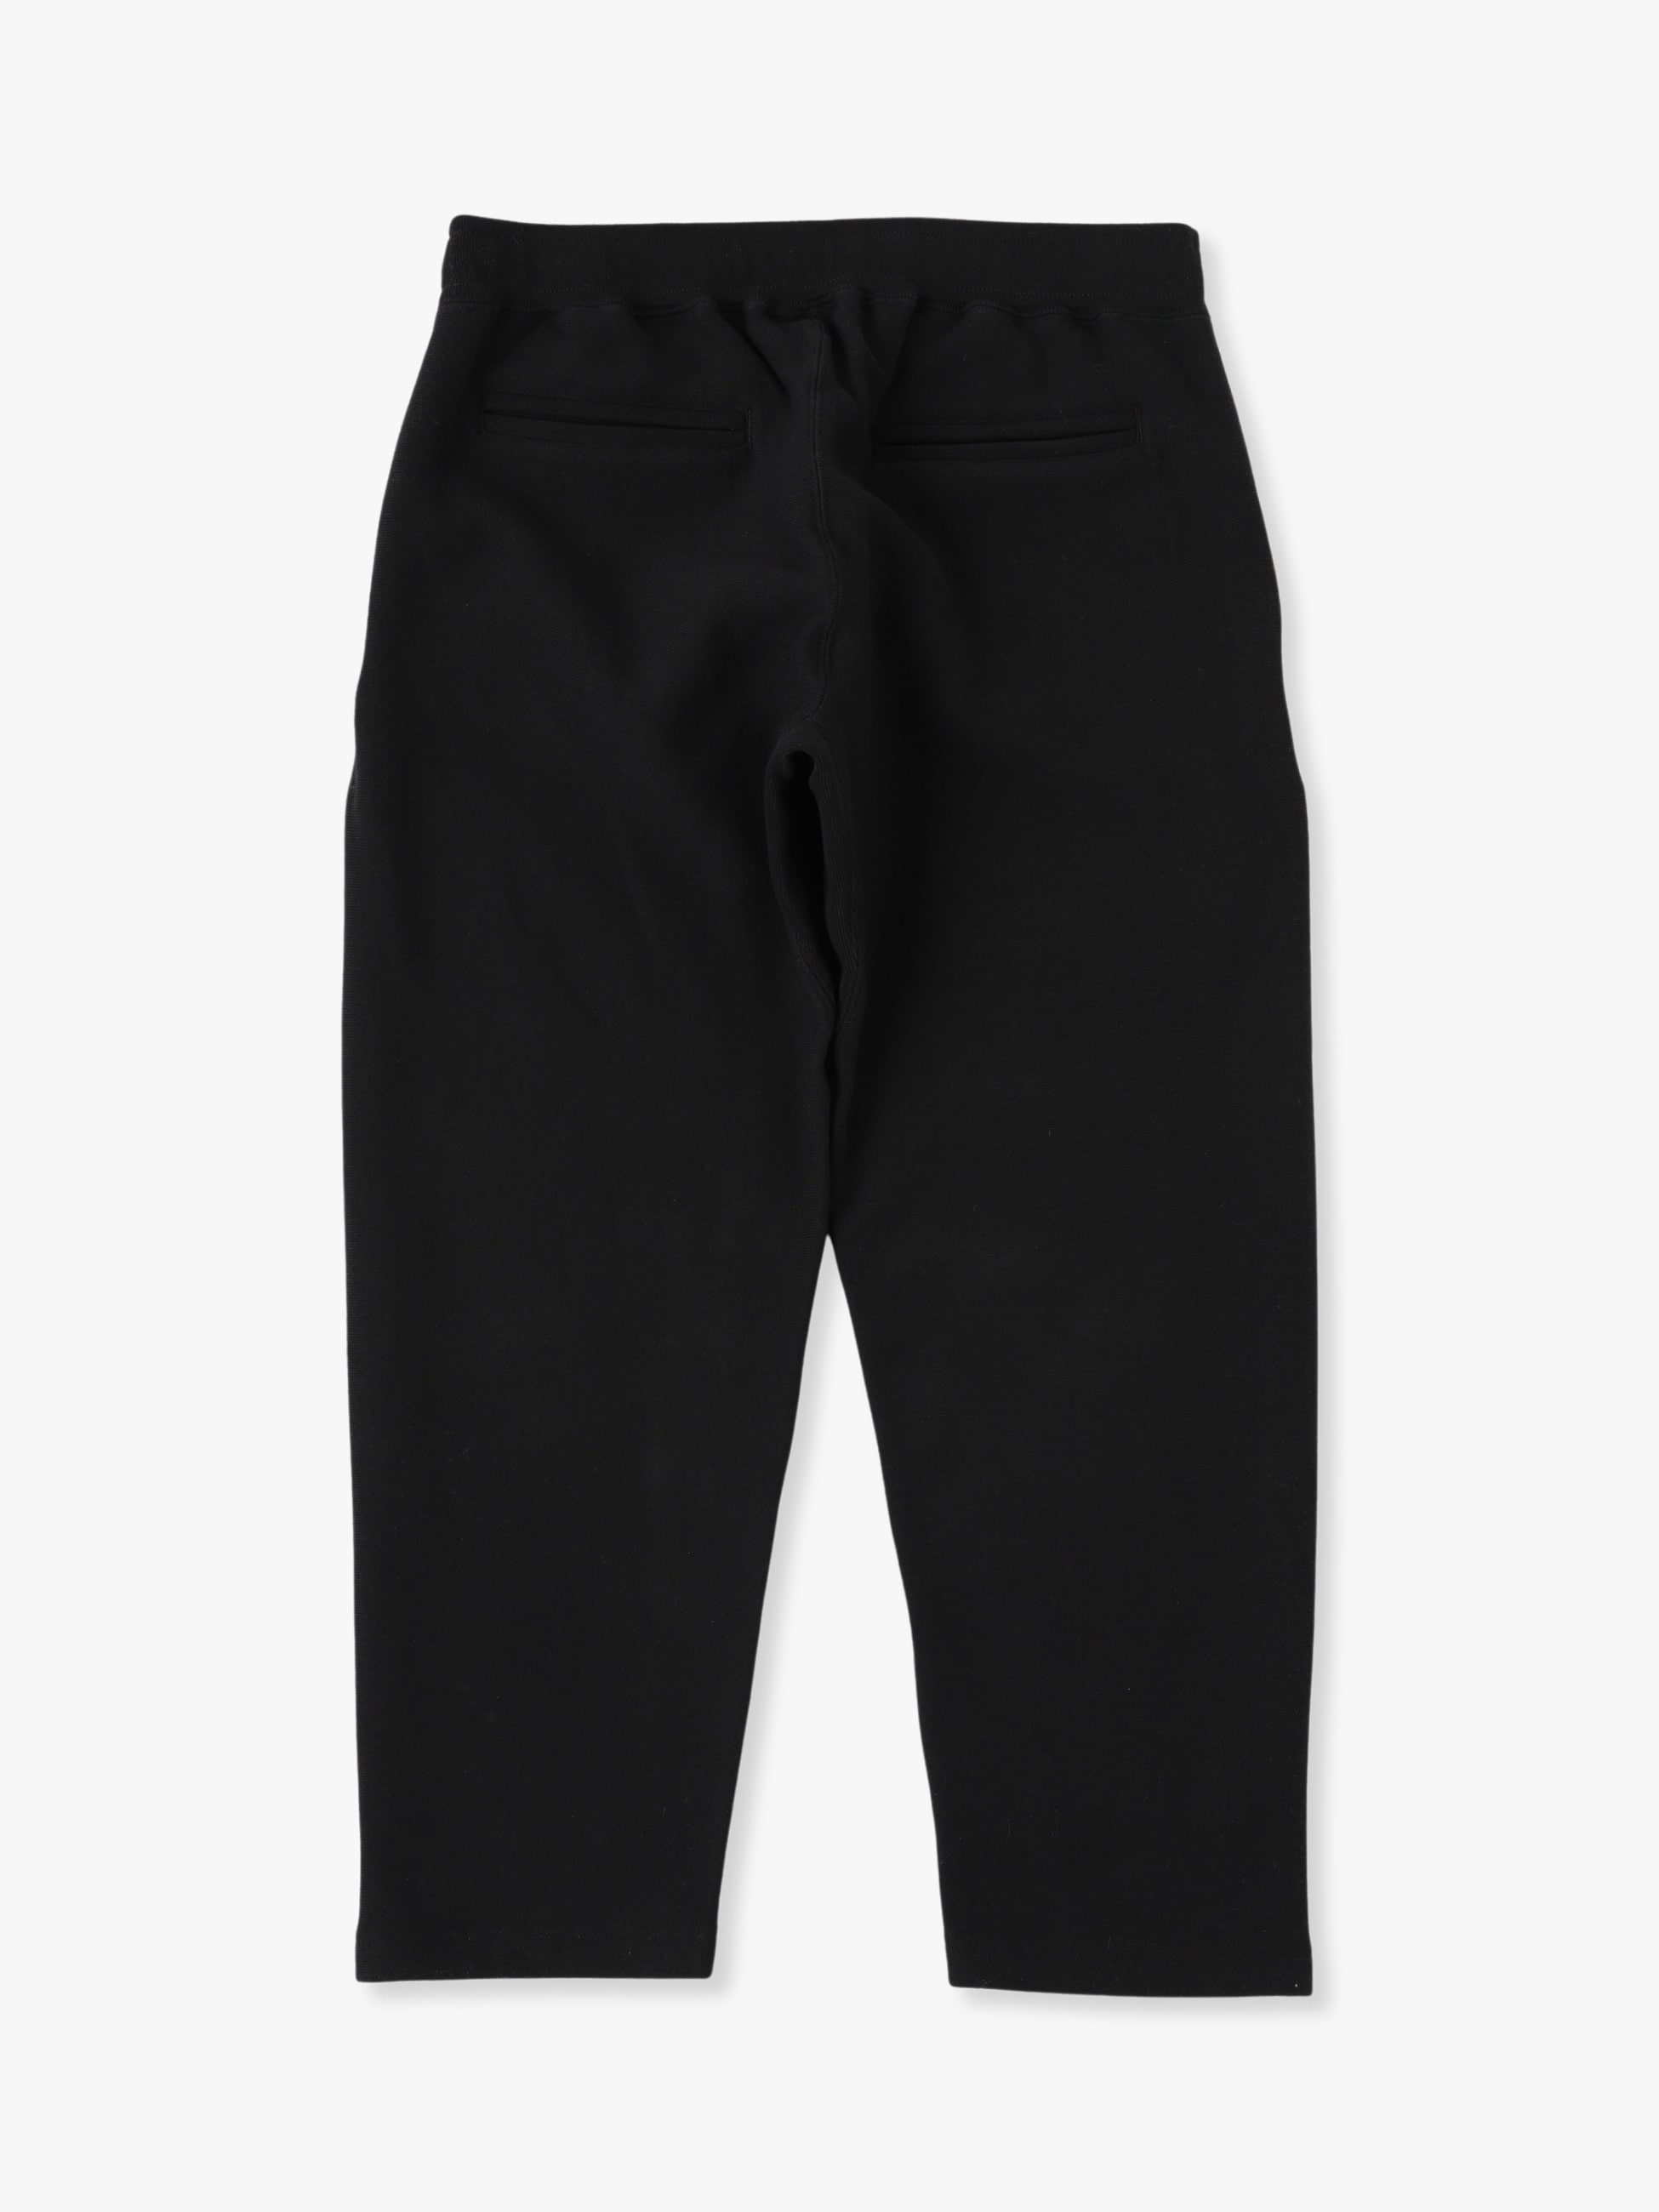 Reverse Weave Sweat Pants (gray / black)｜Champion for RHC